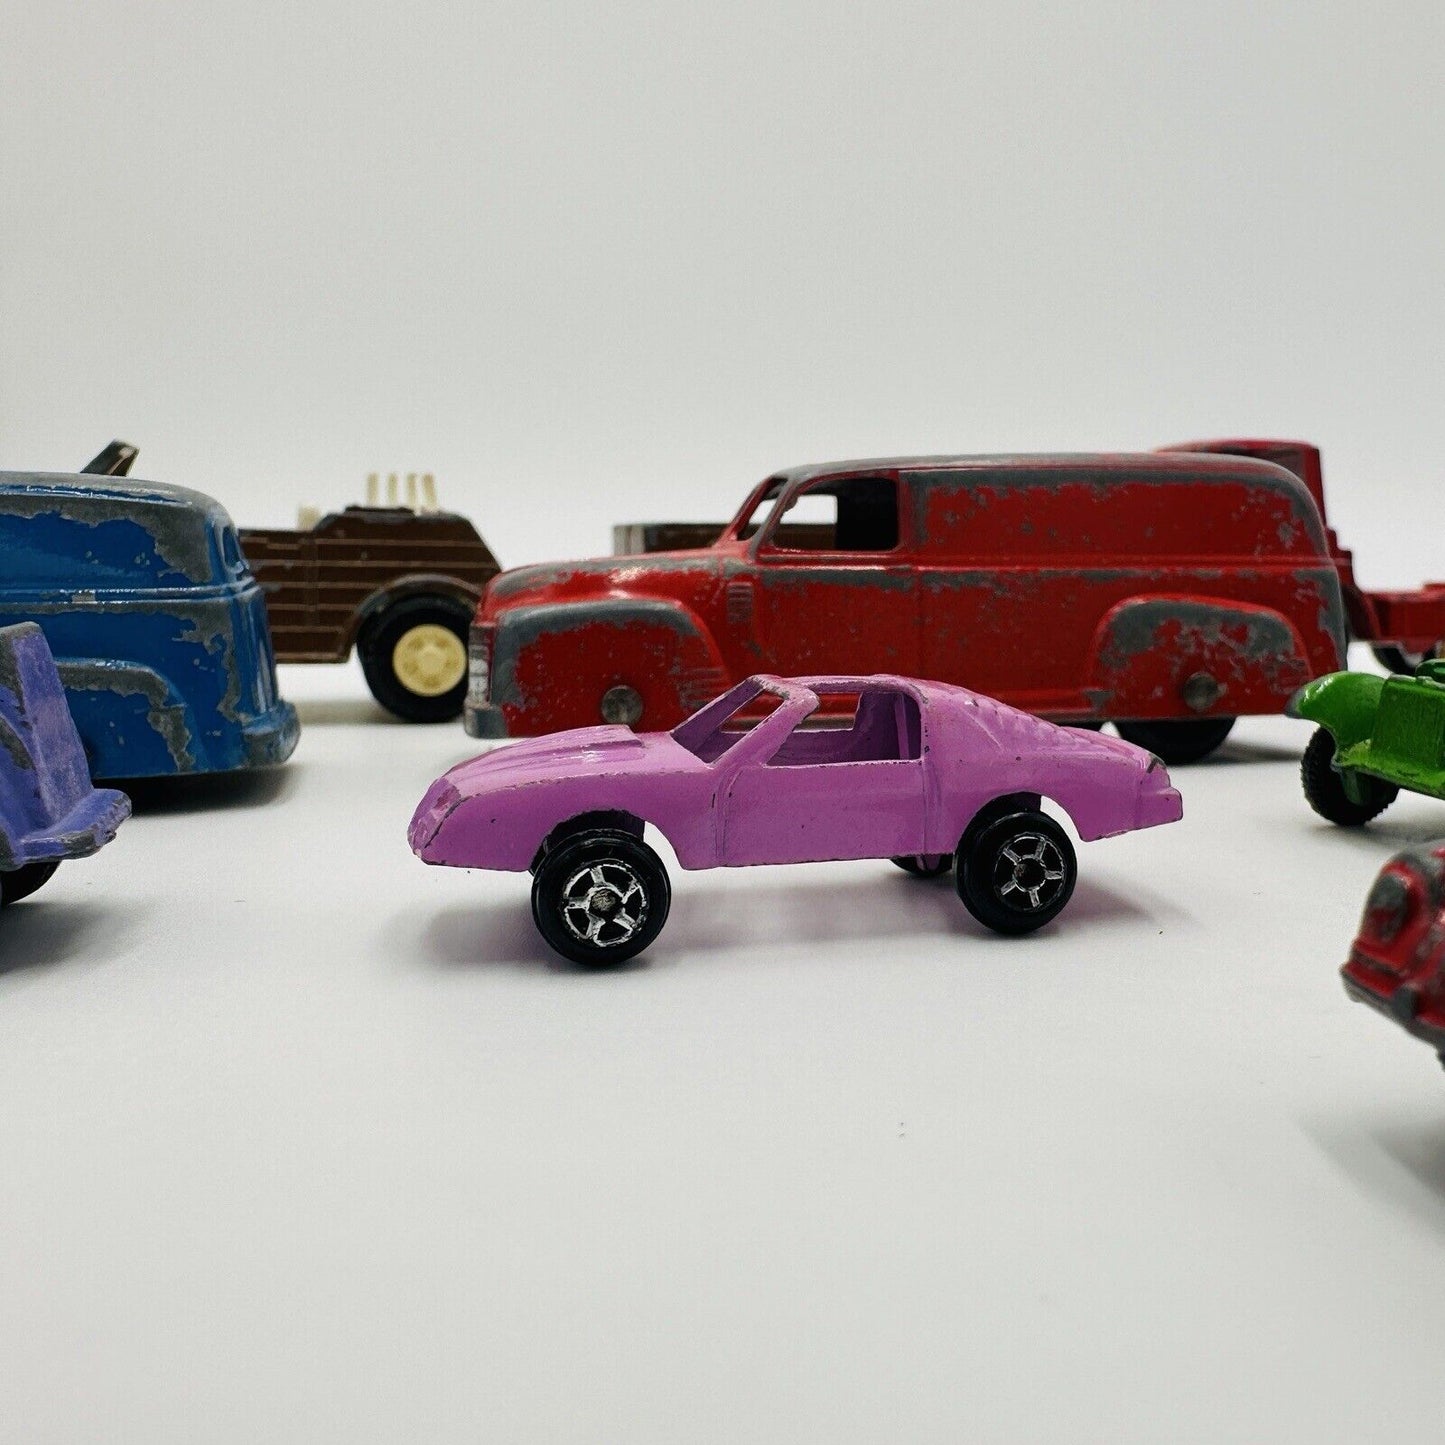 Vintage Tootsie Toys Diecast Metal Car Toys 1970’ Lot Chicago USA Mini & Medium